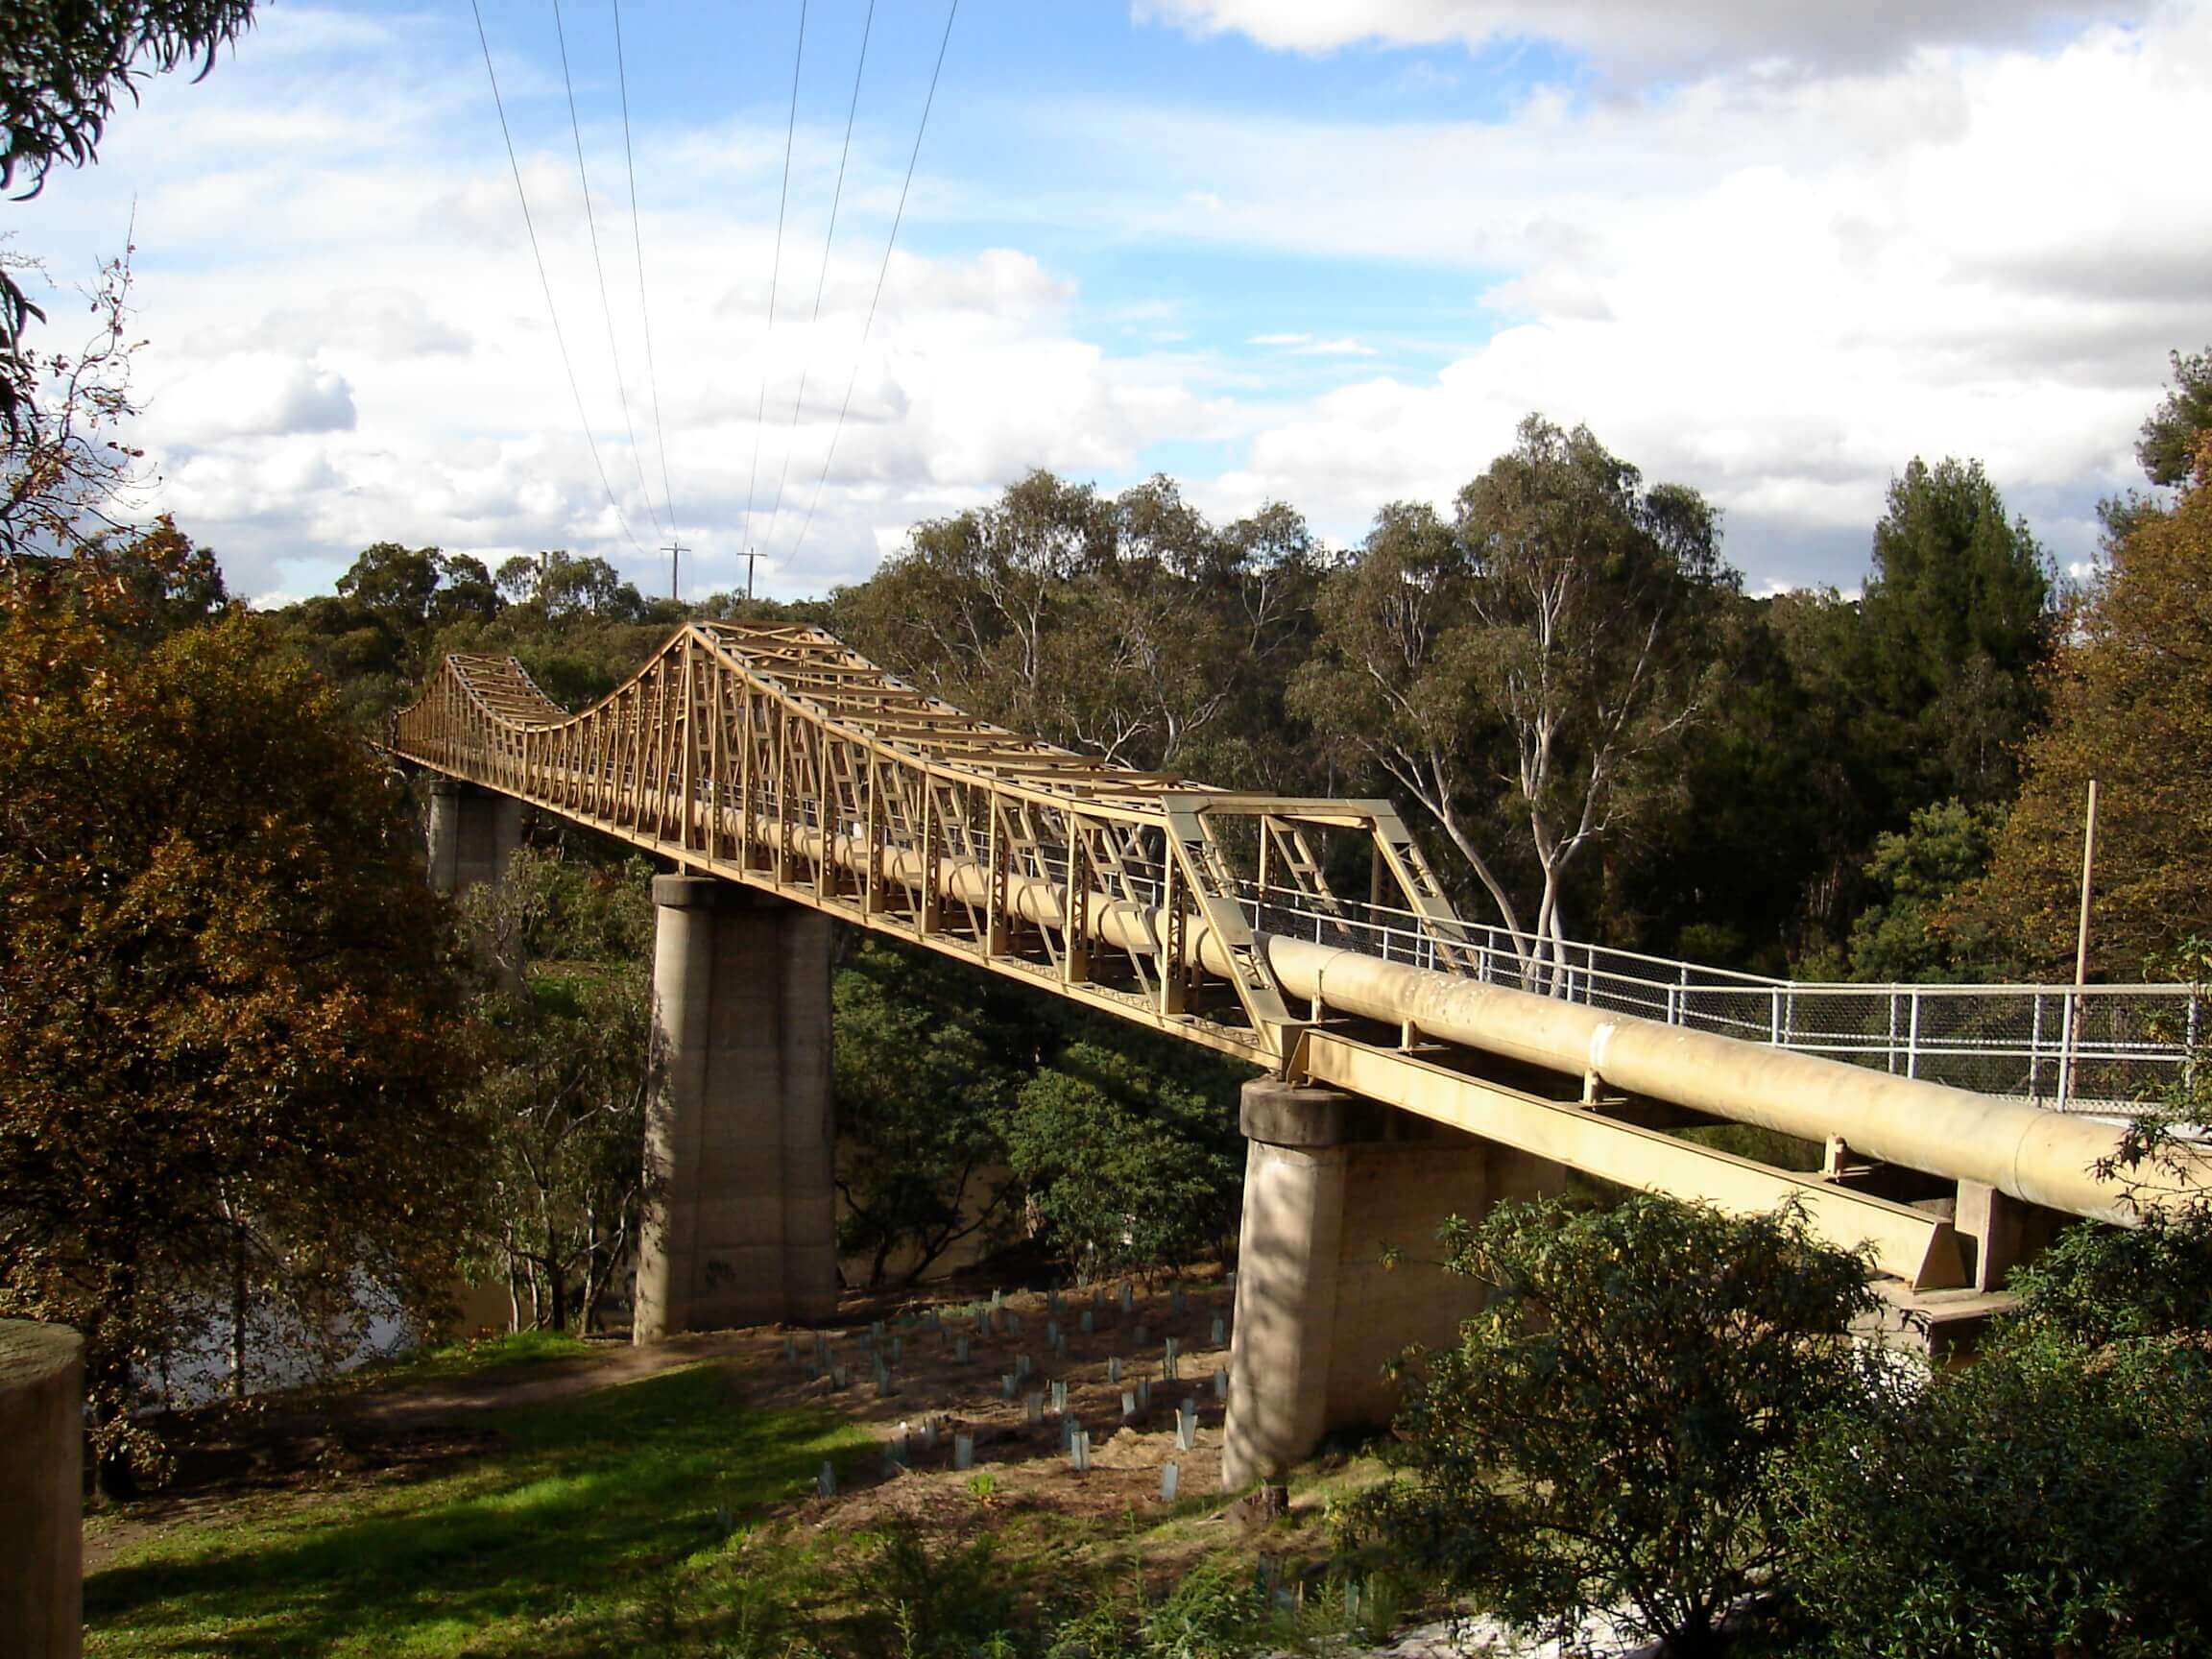 The Fairfield Pipe Bridge